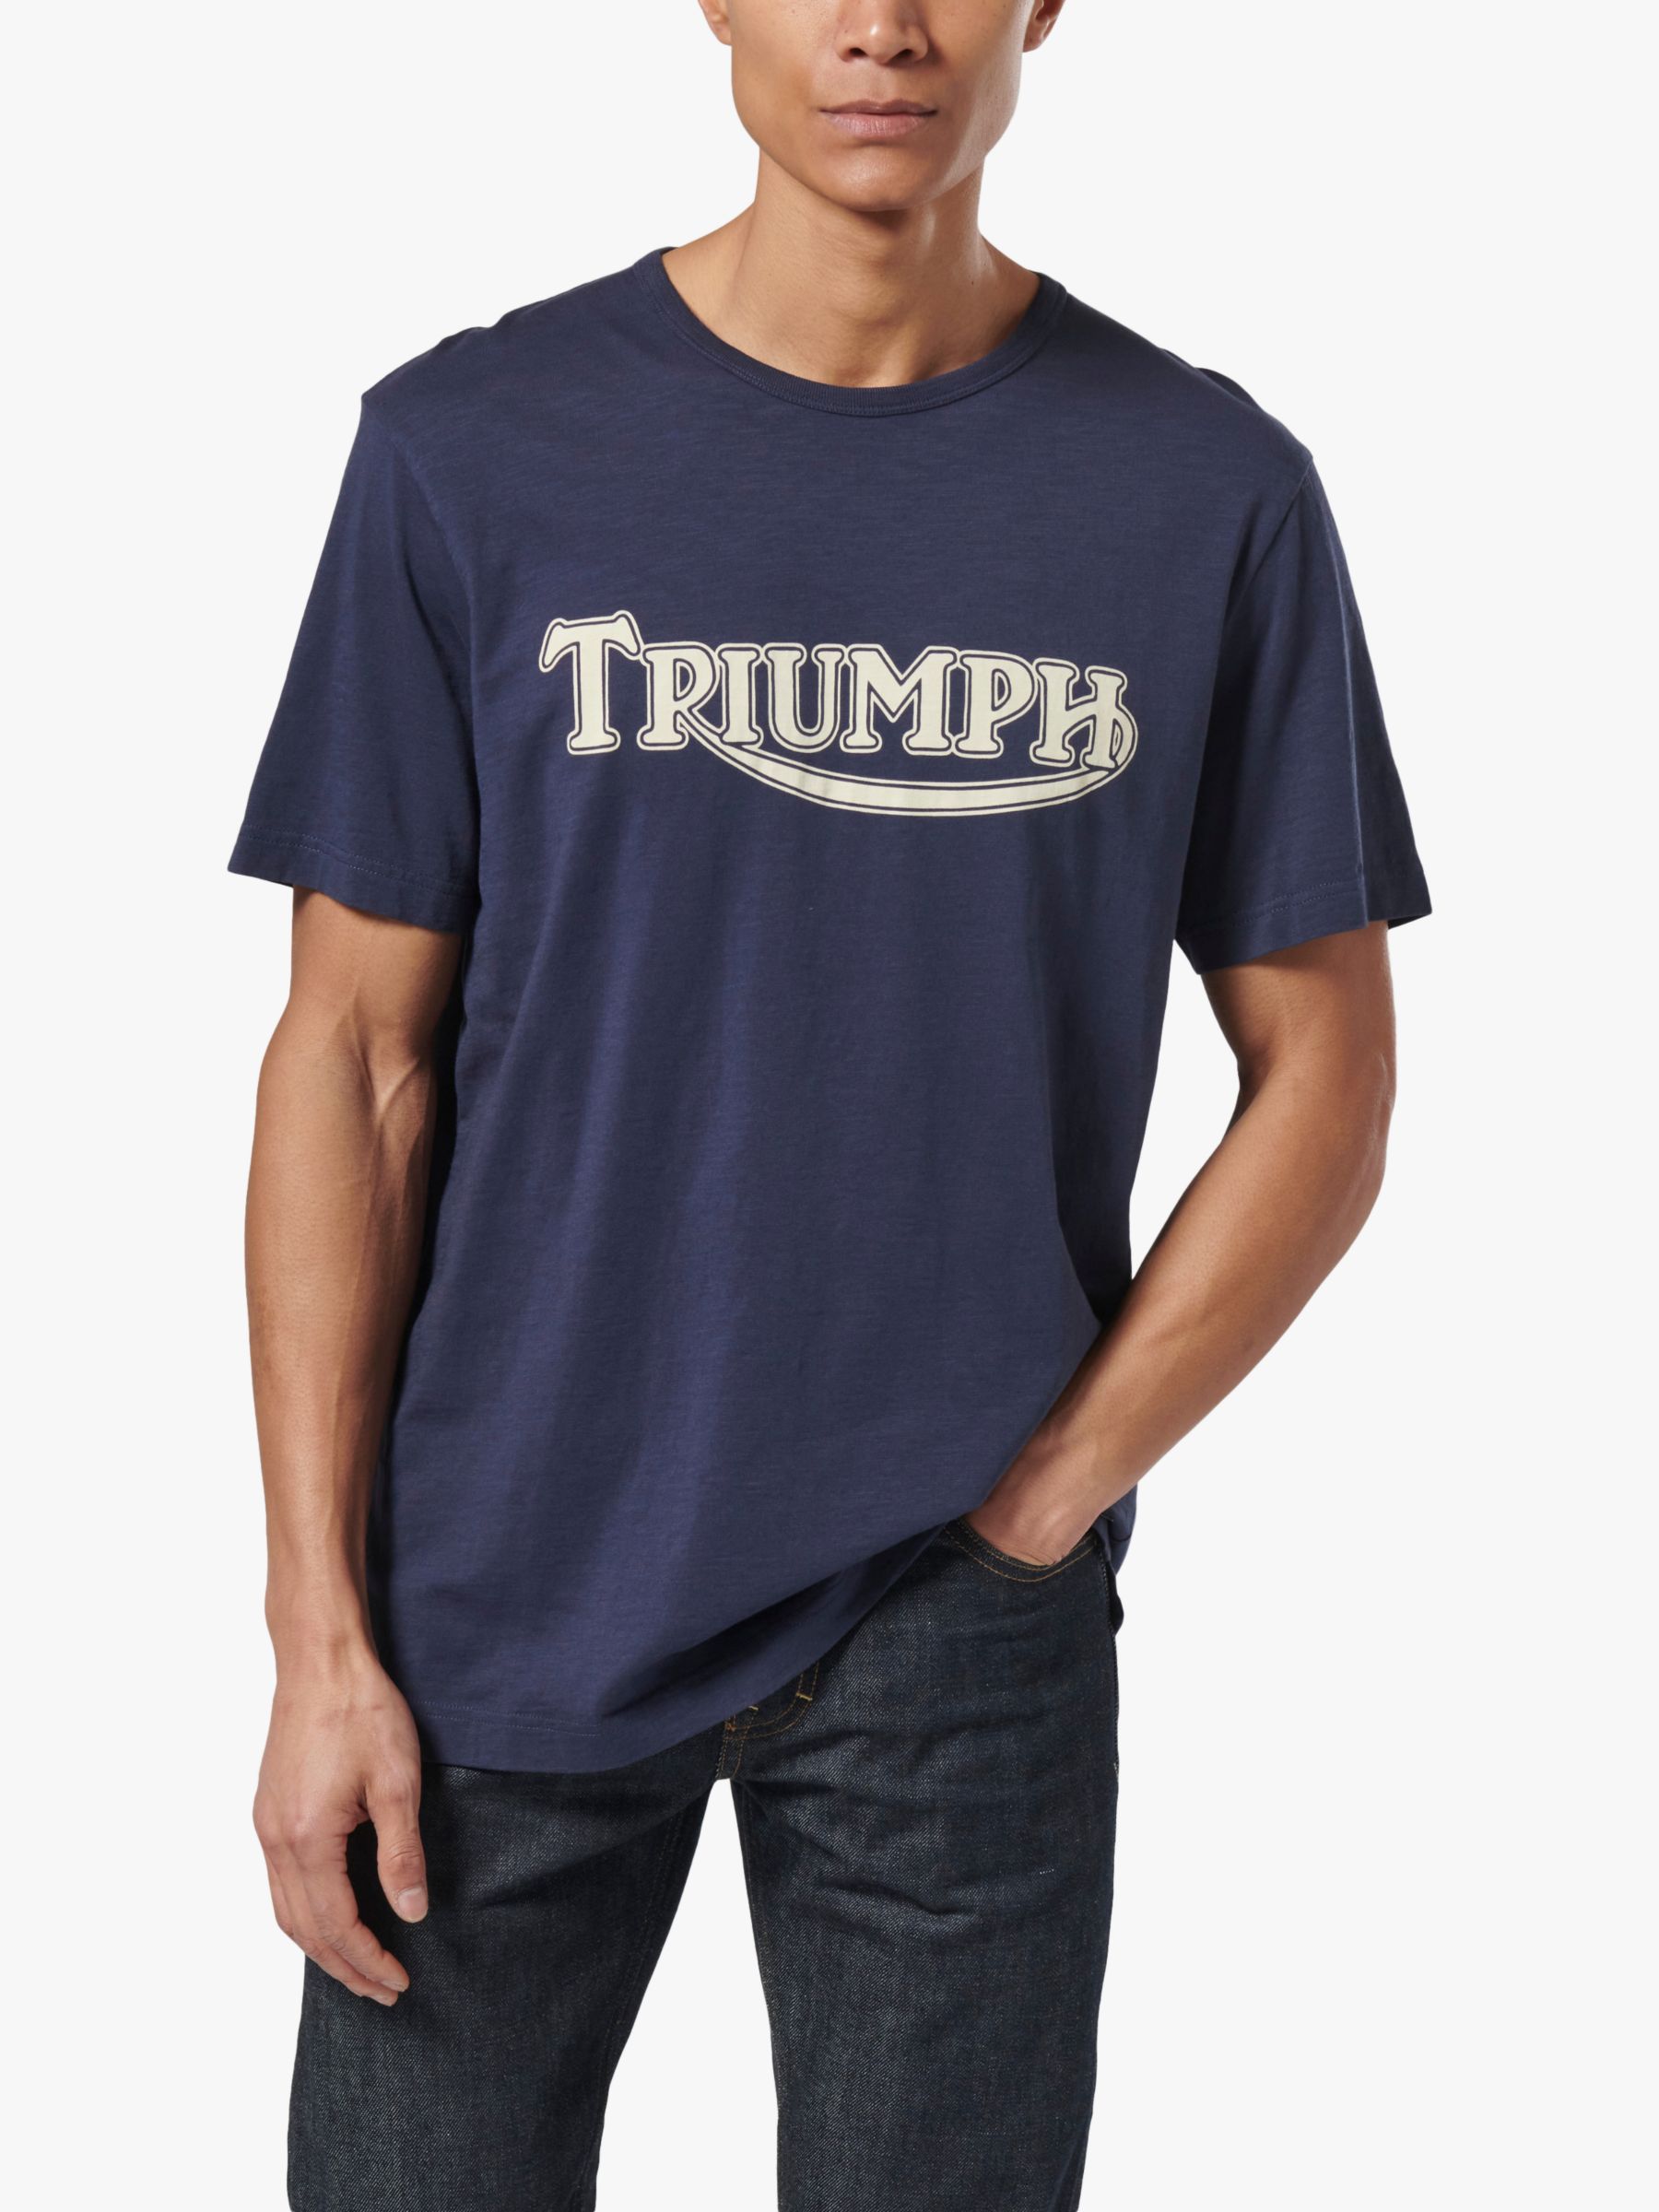 Triumph Motorcycles Fork Seal T-Shirt, Indigo, L